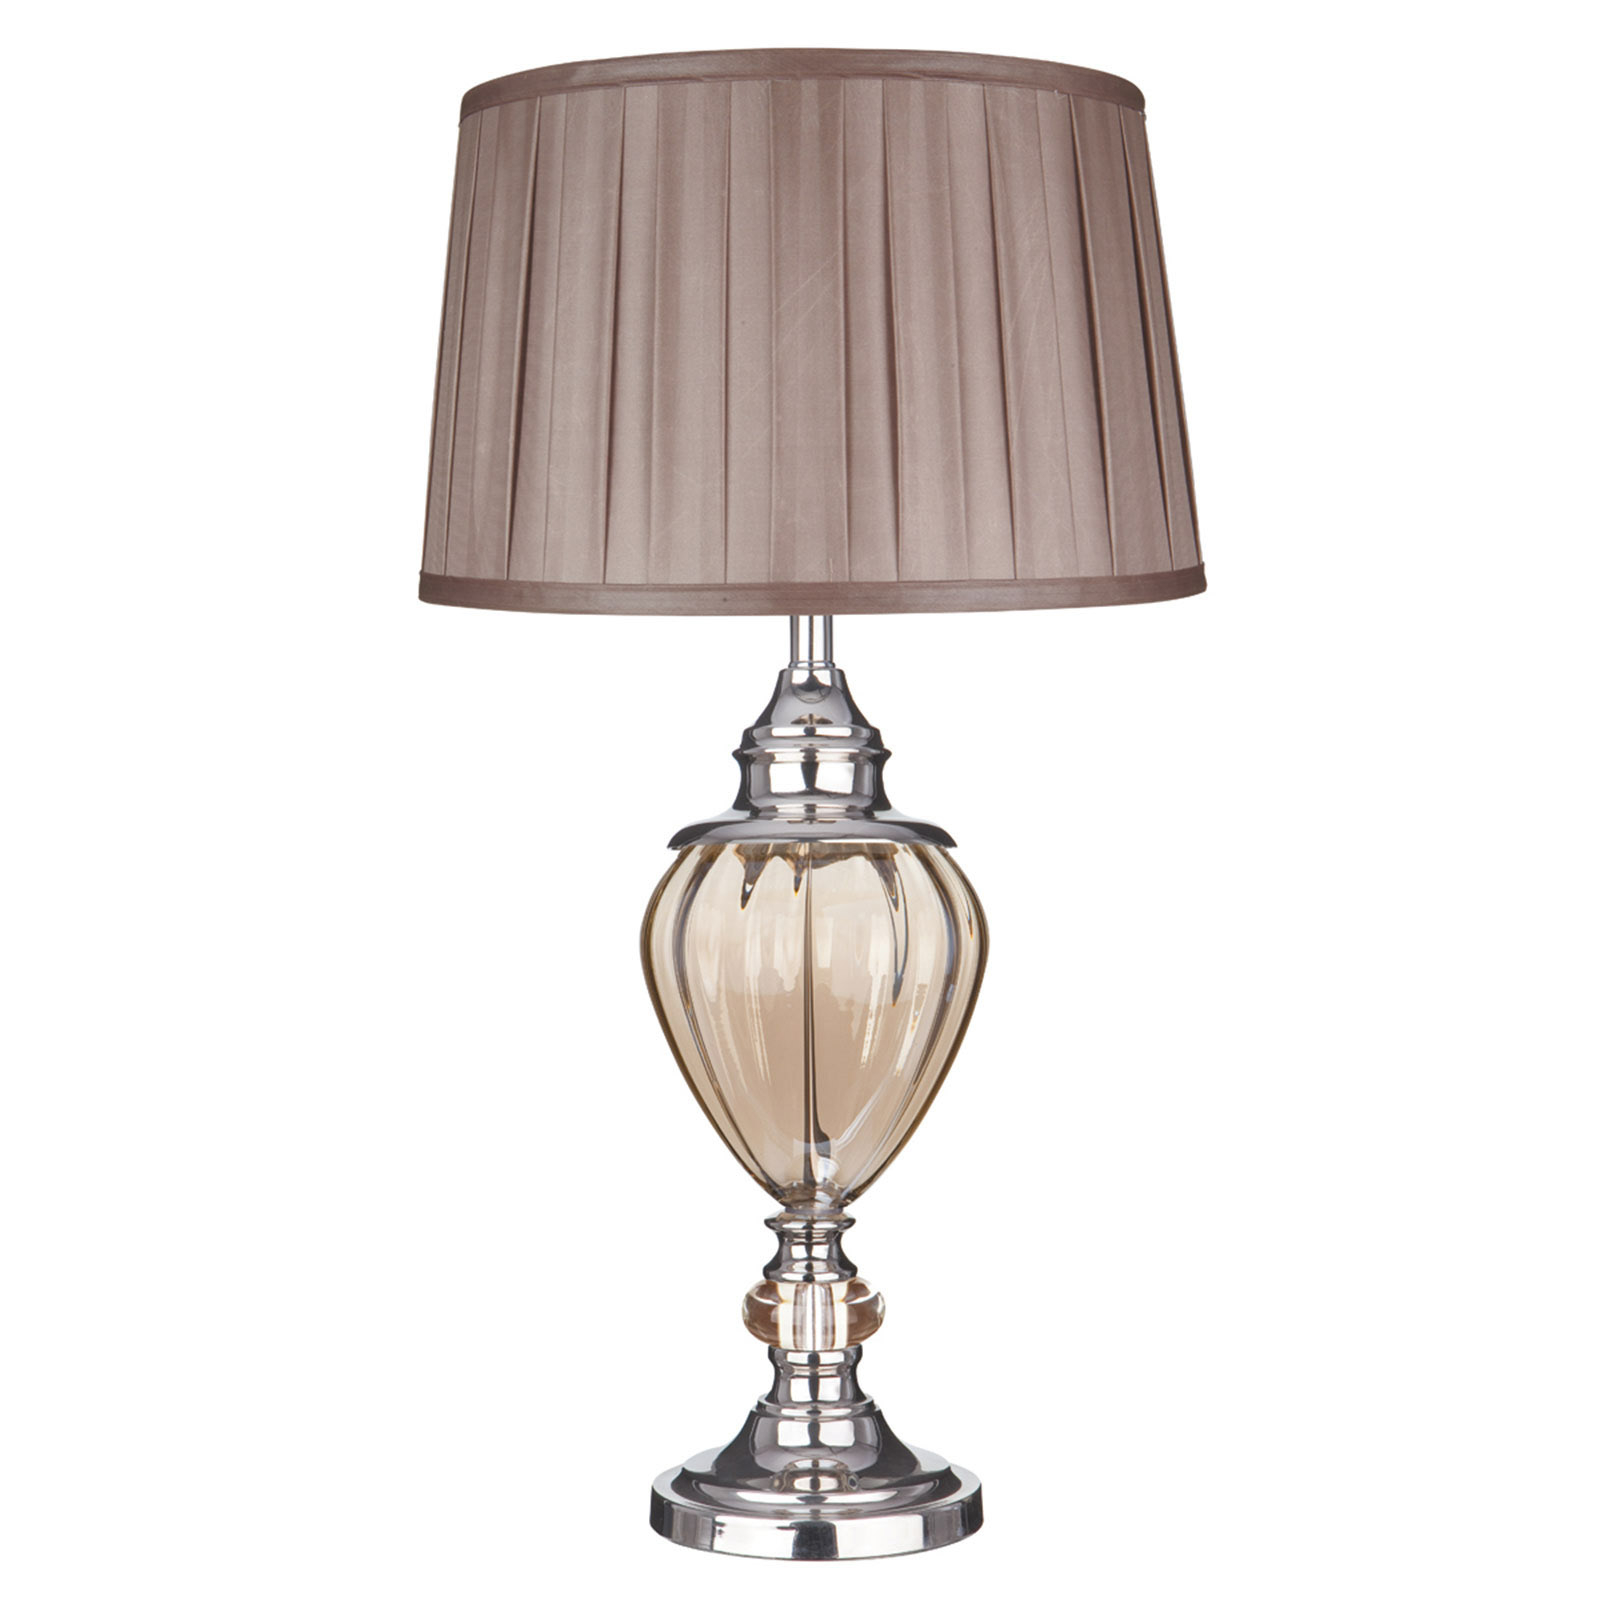 Greyson bordlampe med tekstilskærm, brun